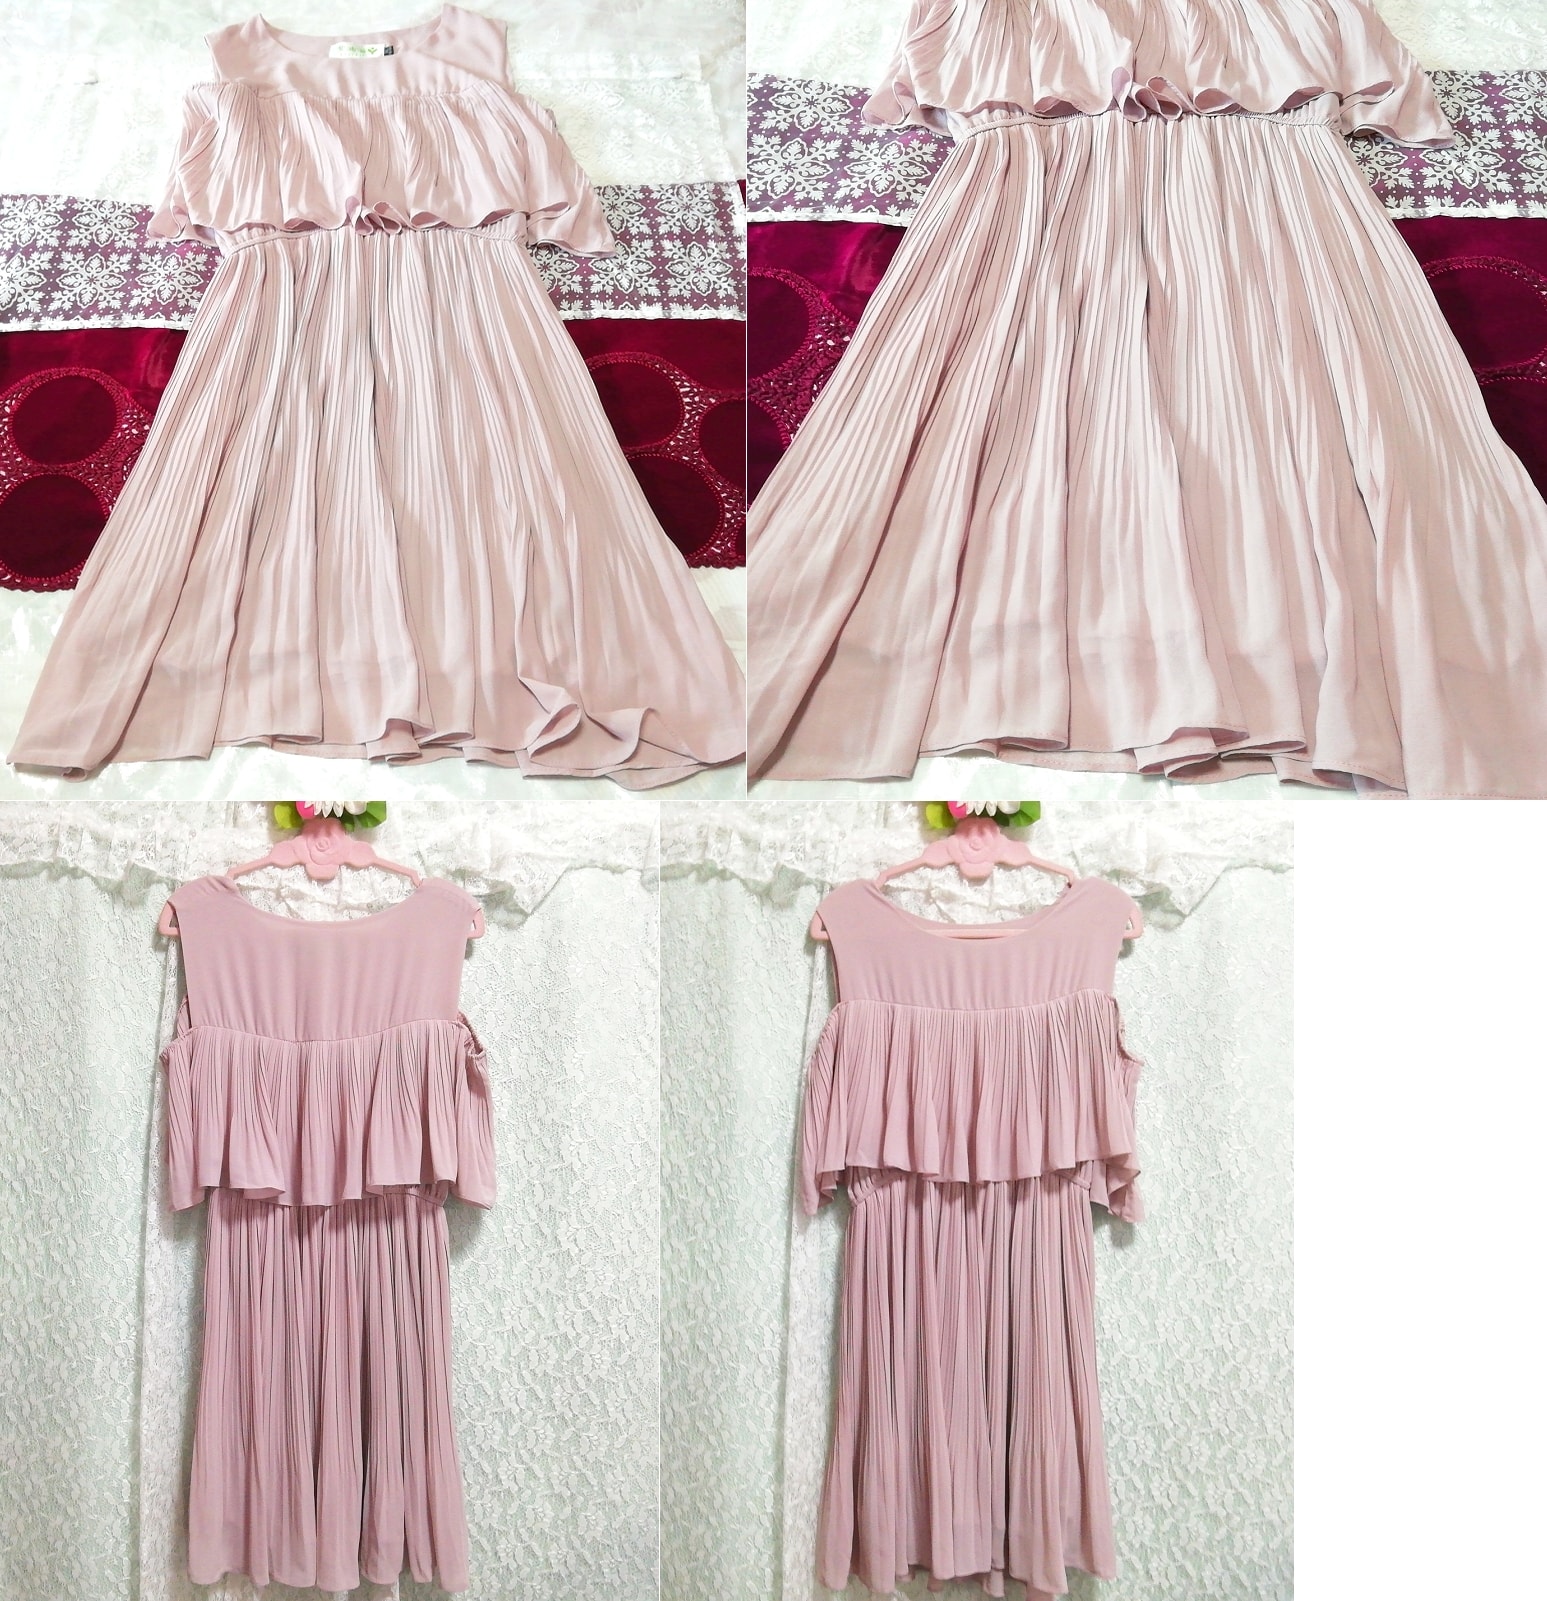 Purple chiffon sleeveless negligee nightgown half dress pleated skirt, knee length skirt, m size